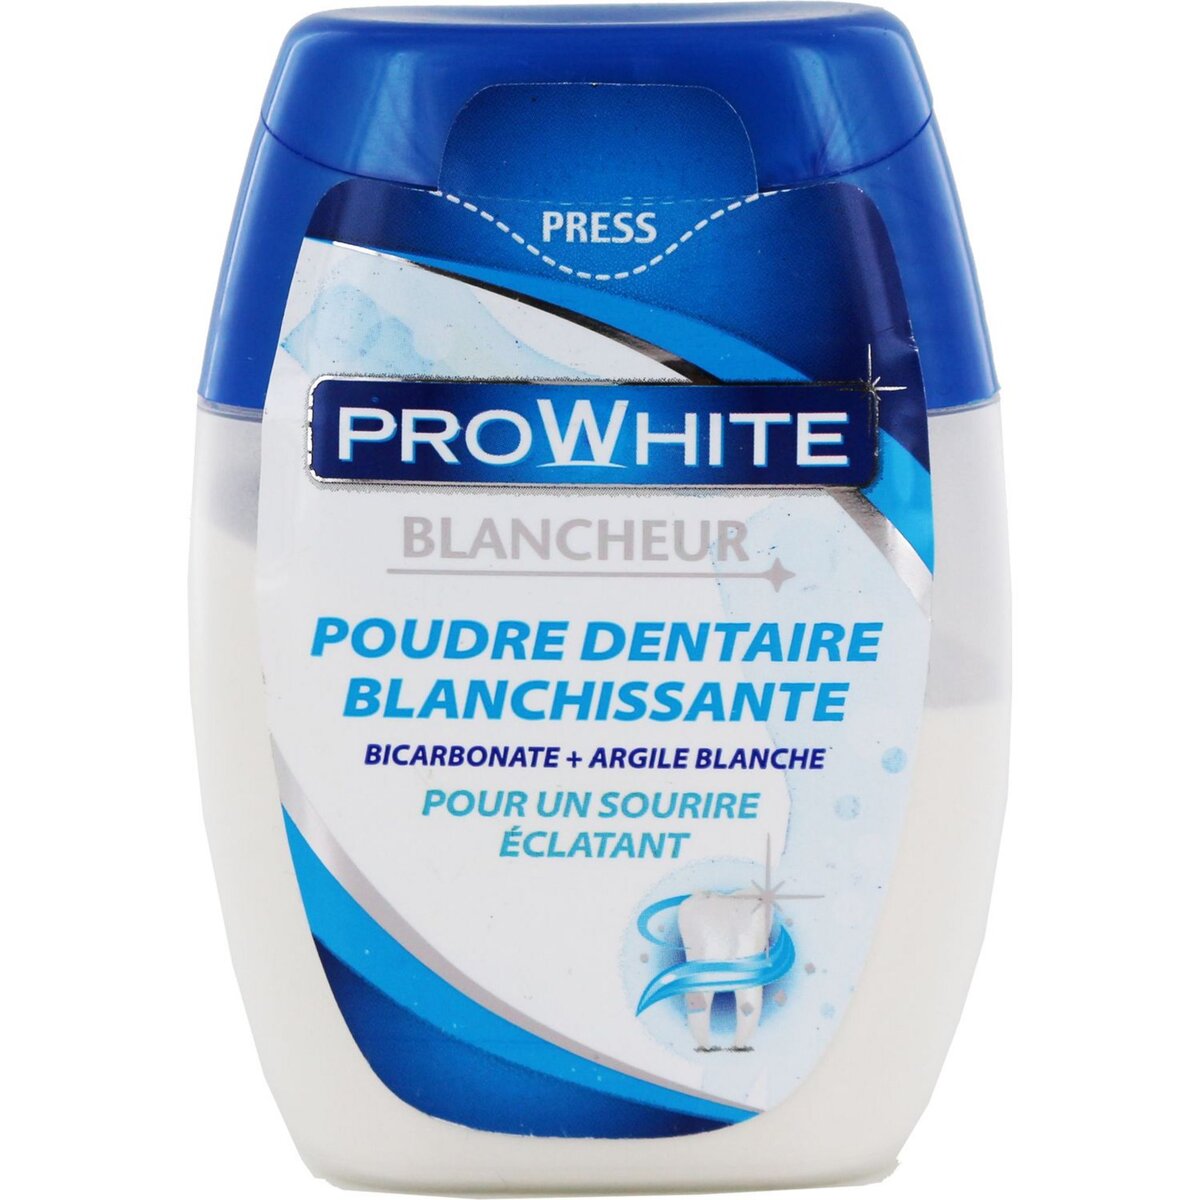 PROWHITE Blancheur poudre dentaire blanchissante 80g